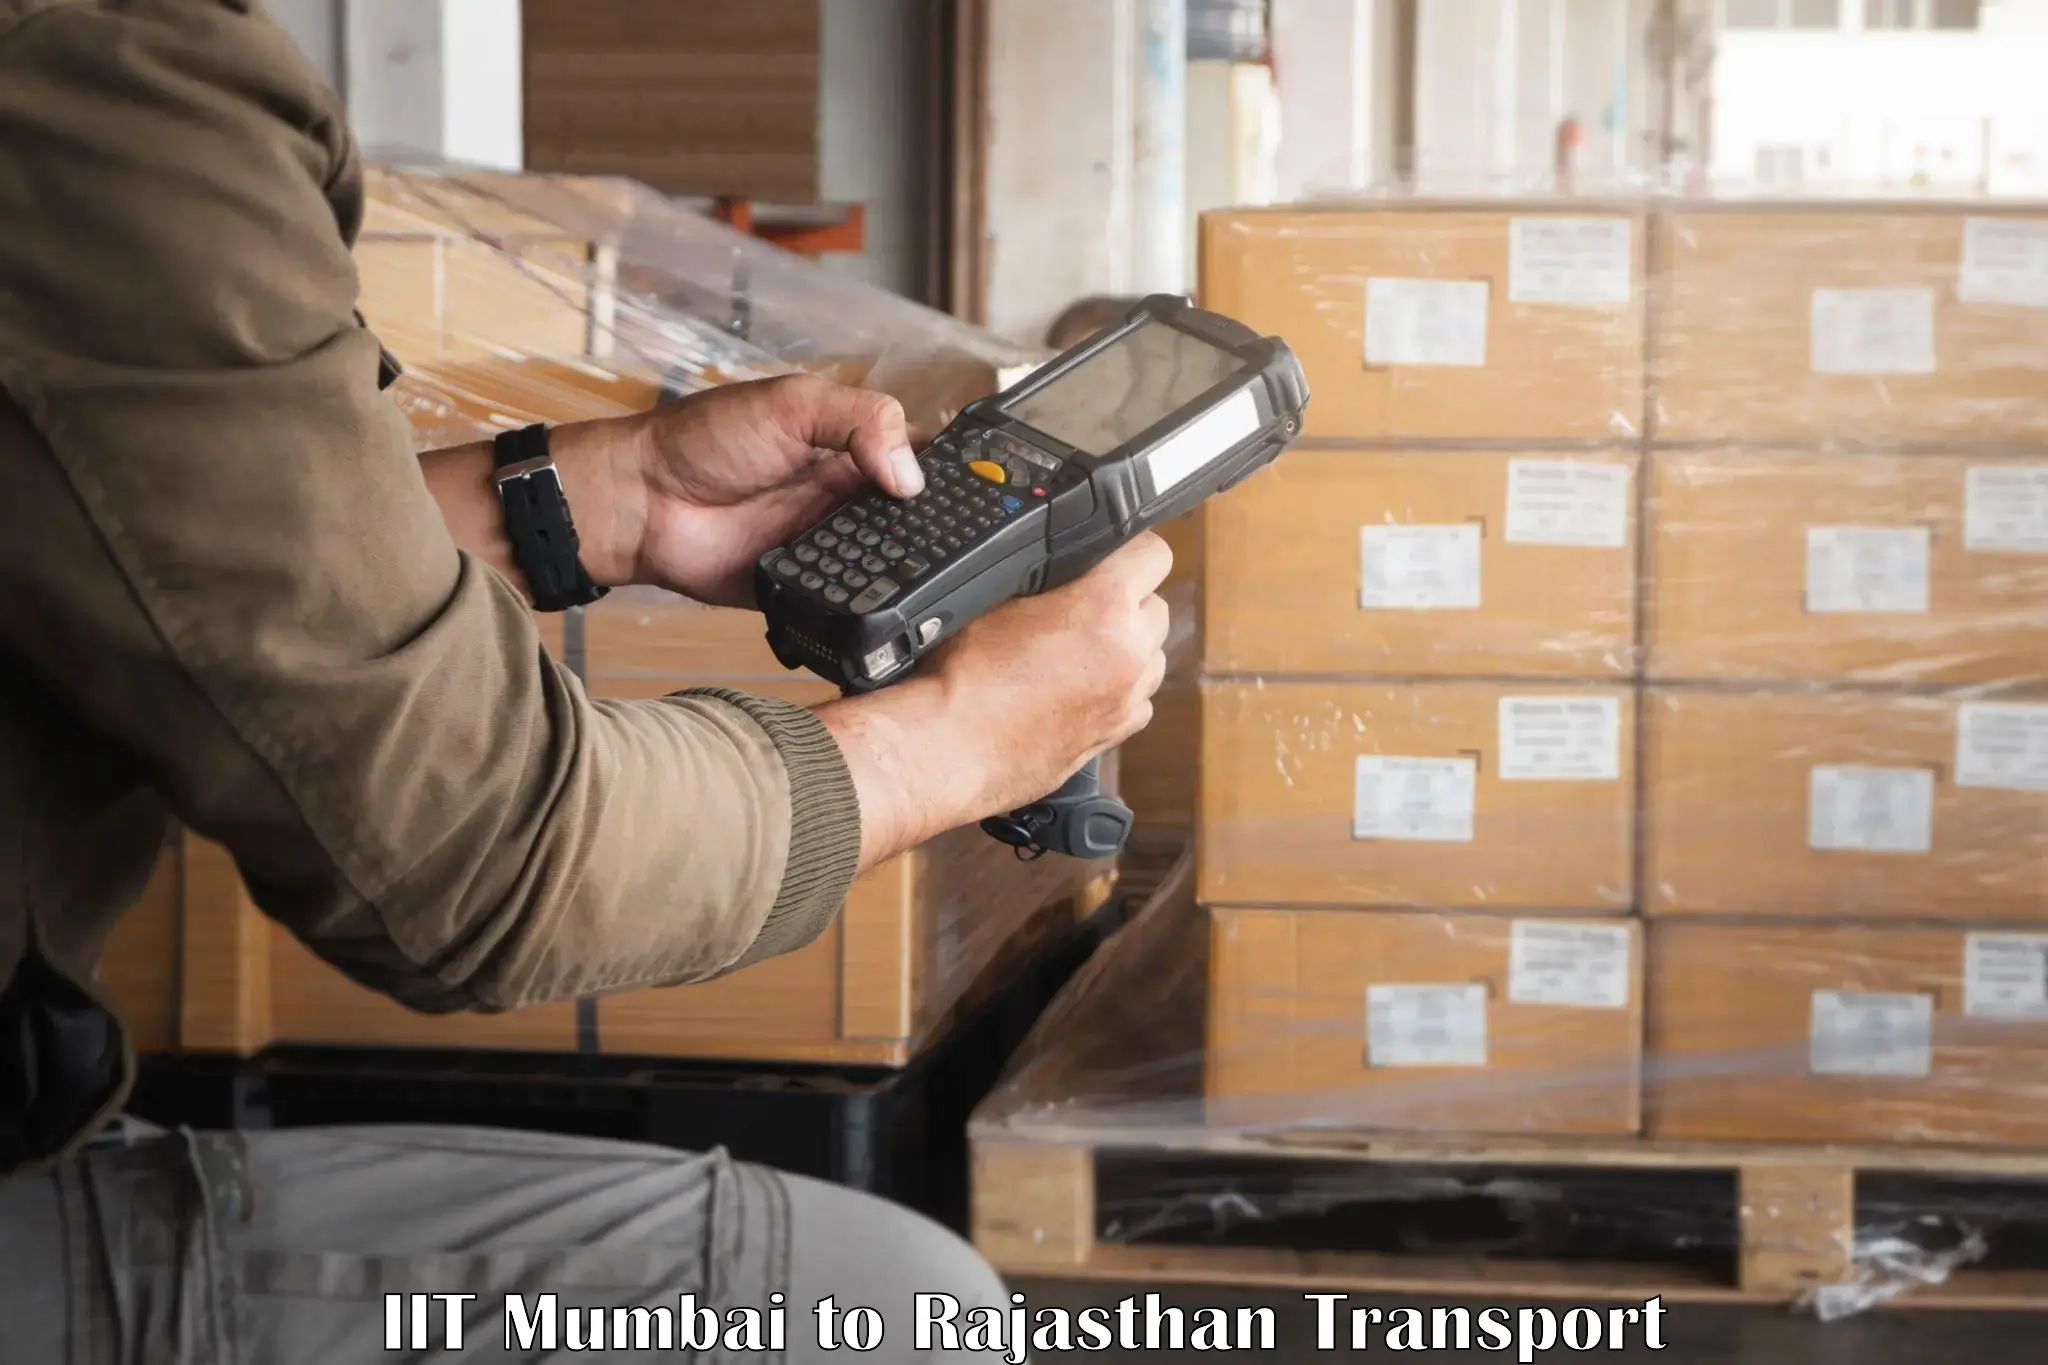 Truck transport companies in India IIT Mumbai to Mandalgarh